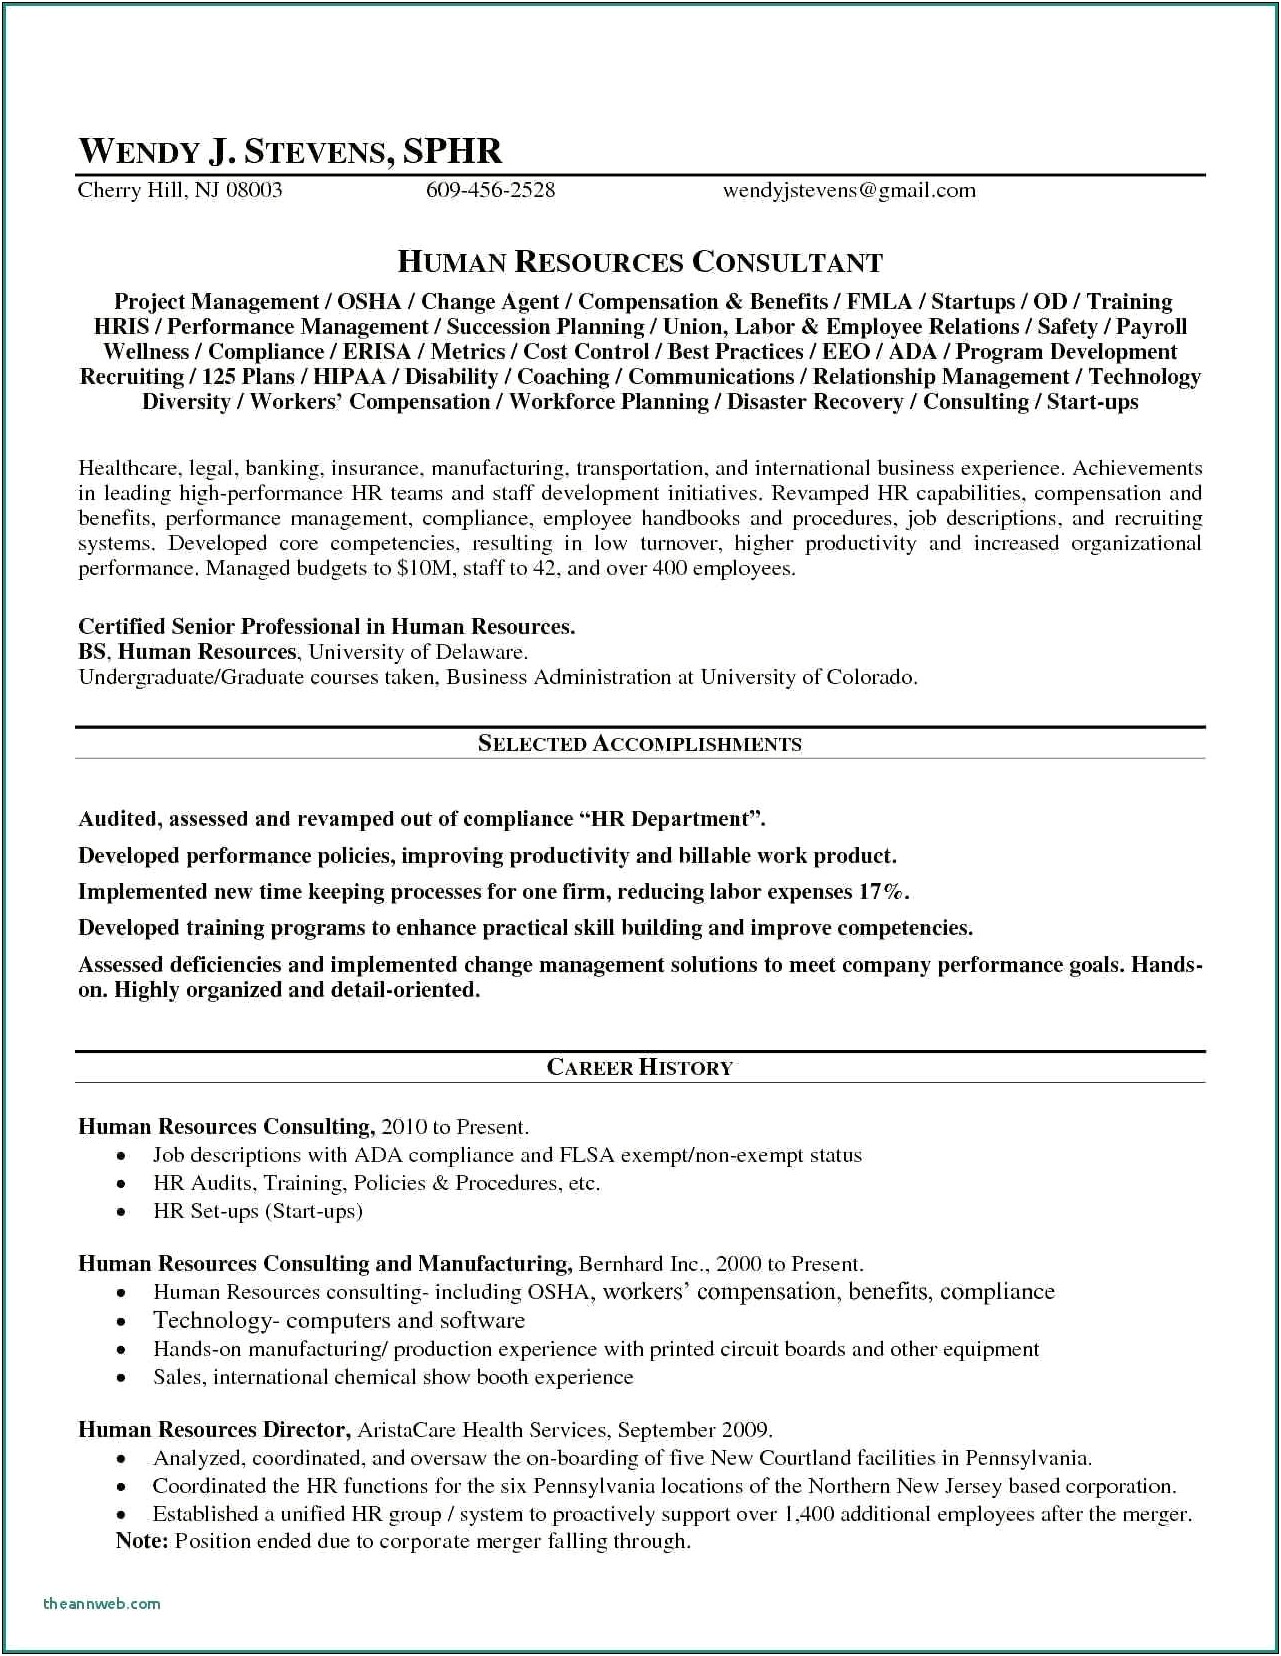 Human Resources Director Job Description Resume